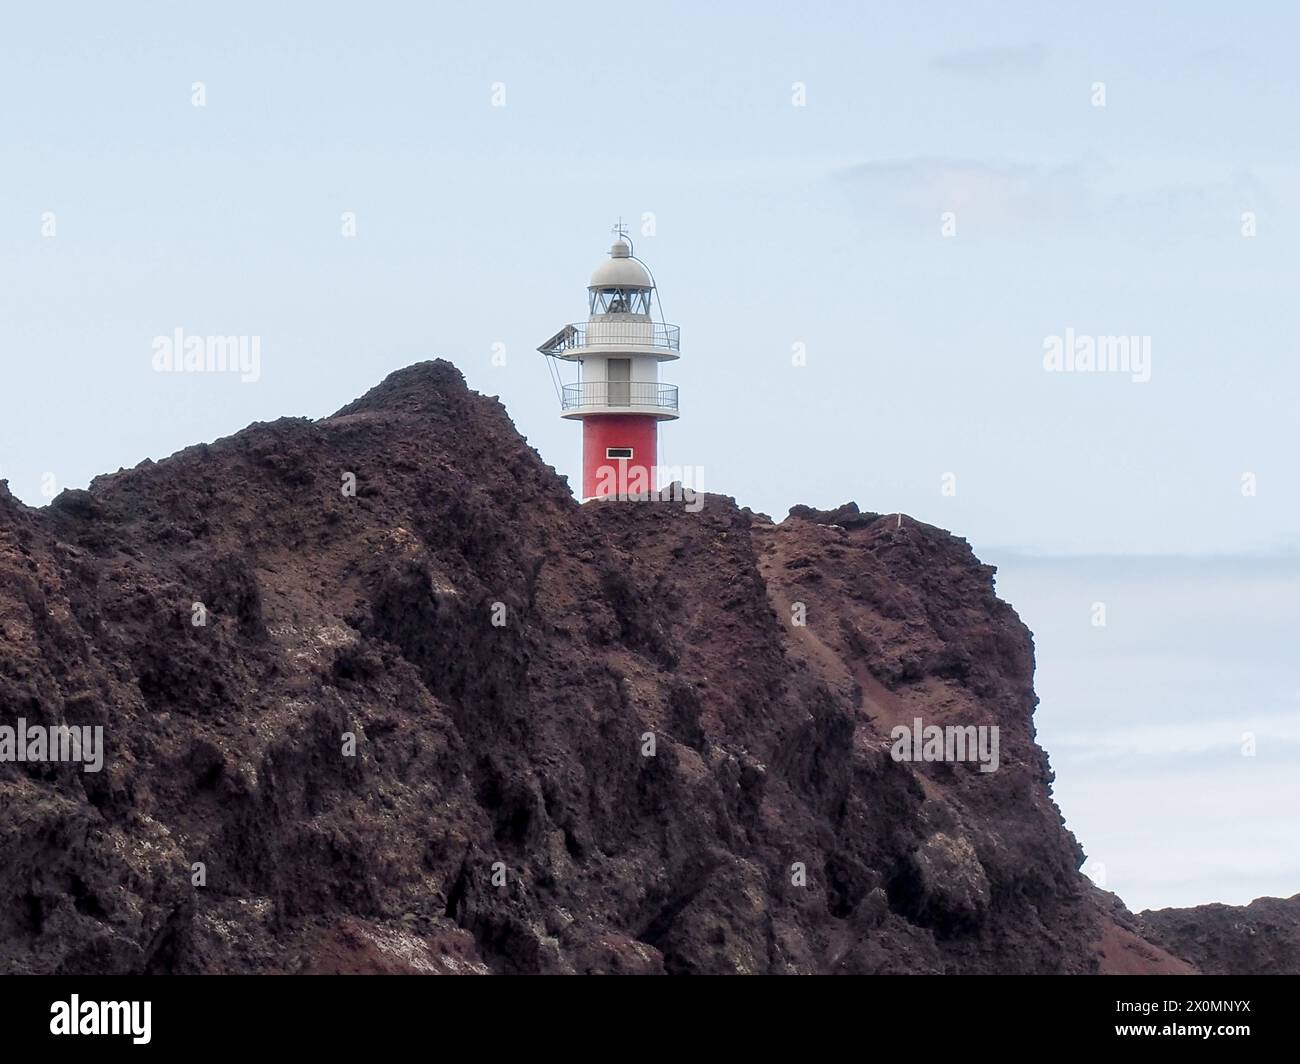 Punta de Teno, Tenerife, Spain: Coastal lighthouse in the lava promontory Stock Photo